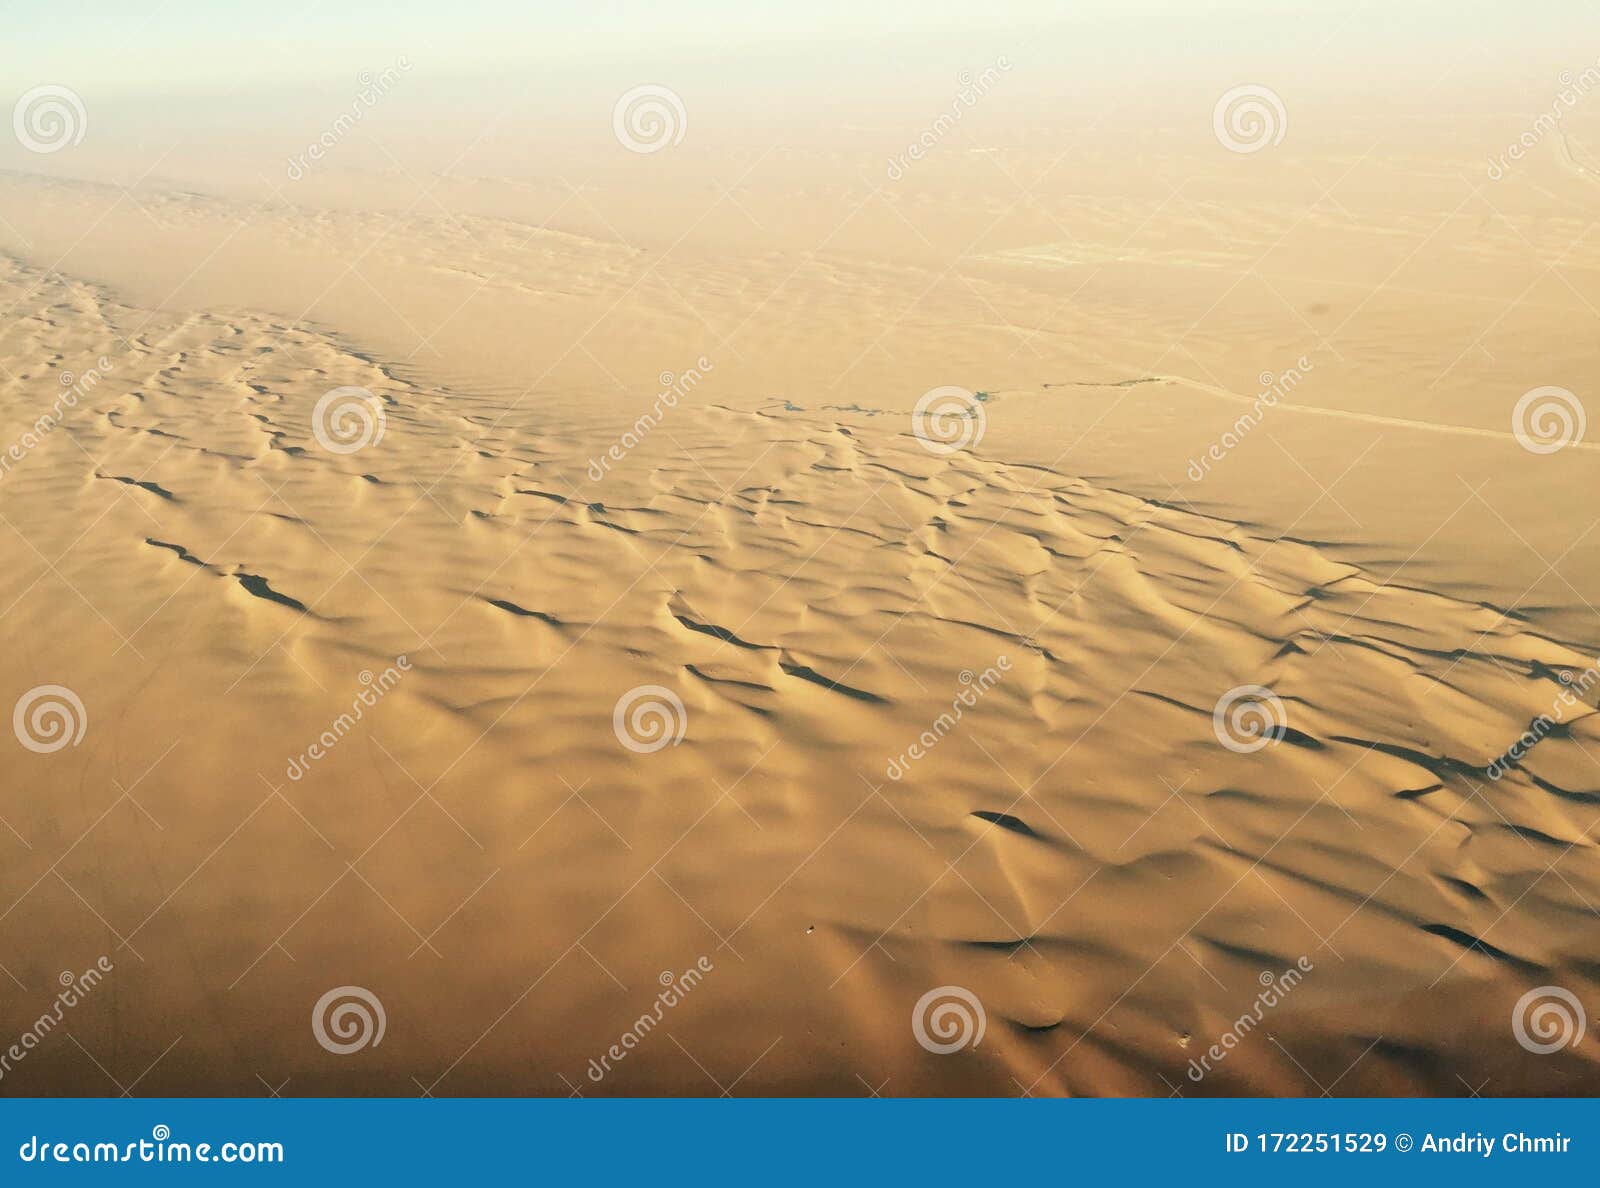 waterless desert. the yellow sands of a waterless desert after a hurricane like the bottom of a large ocean.